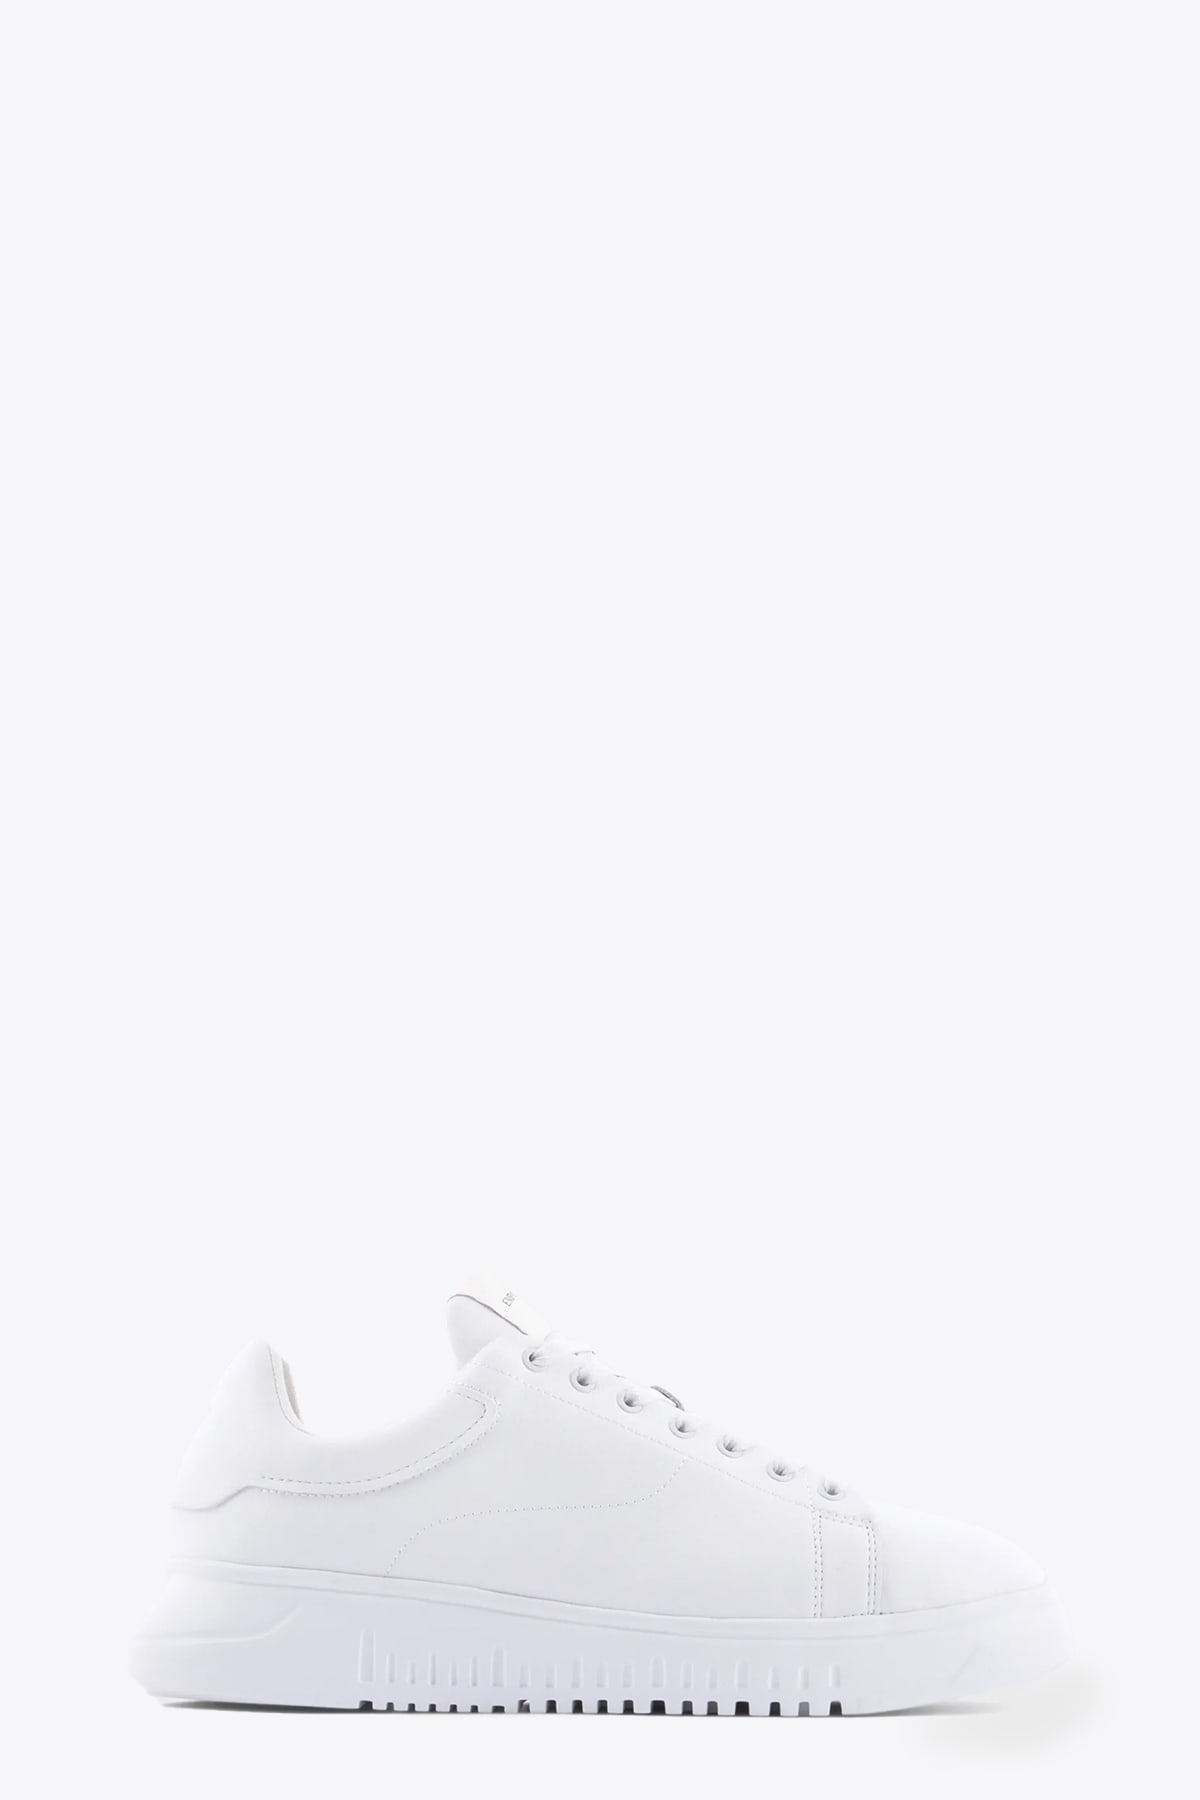 Emporio Armani Sneaker White leather low sneaker with round toe.